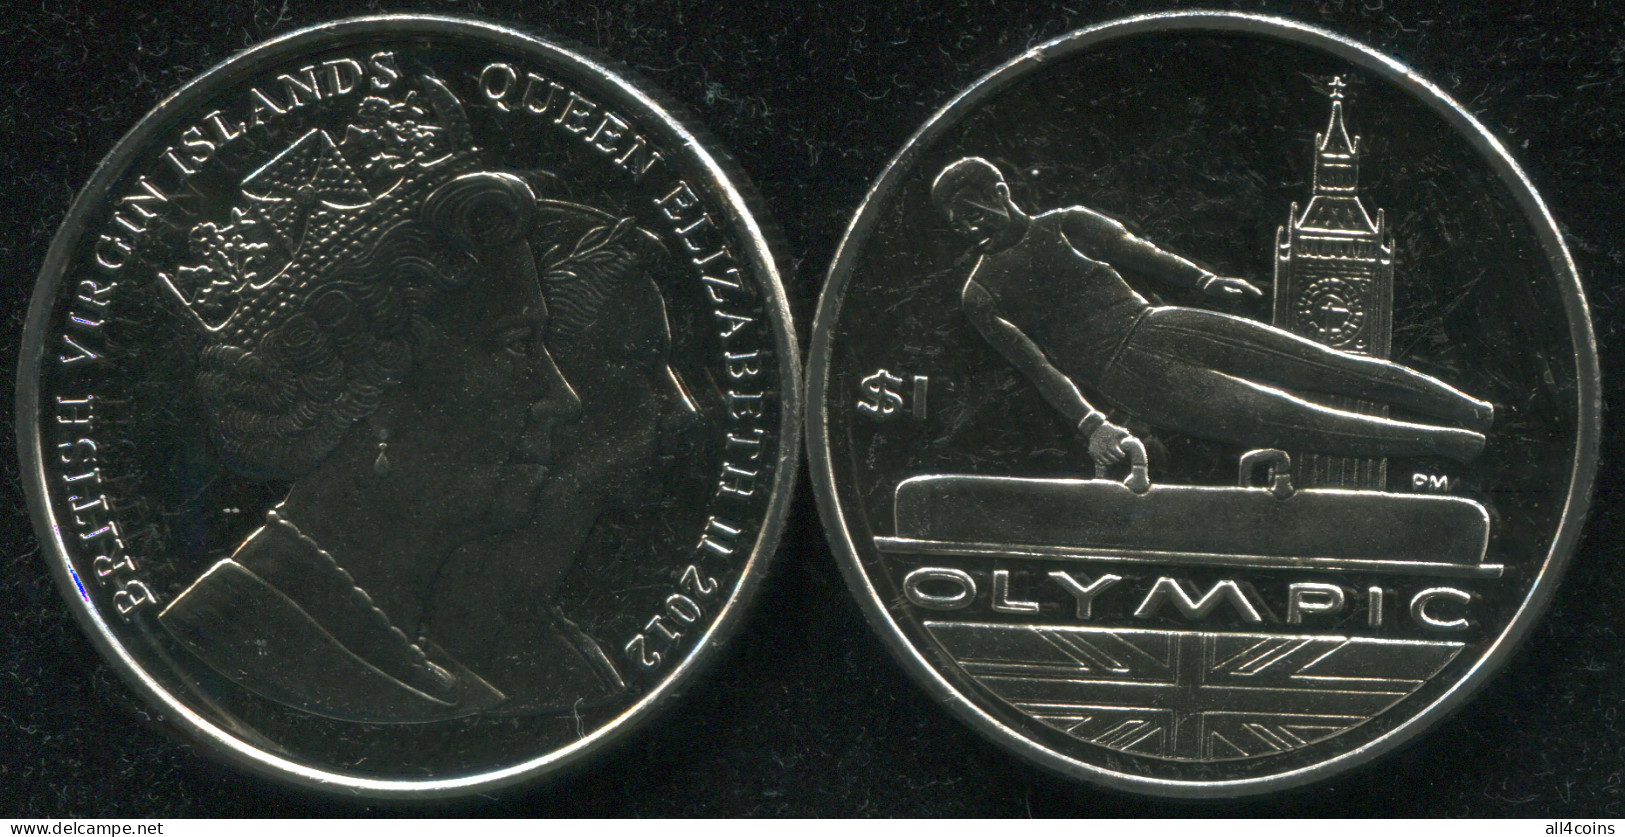 British Virgin Islands. 1 Dollar. 2012 (Coin KM#NL. Unc) Olympiad. Gymnastics - British Virgin Islands